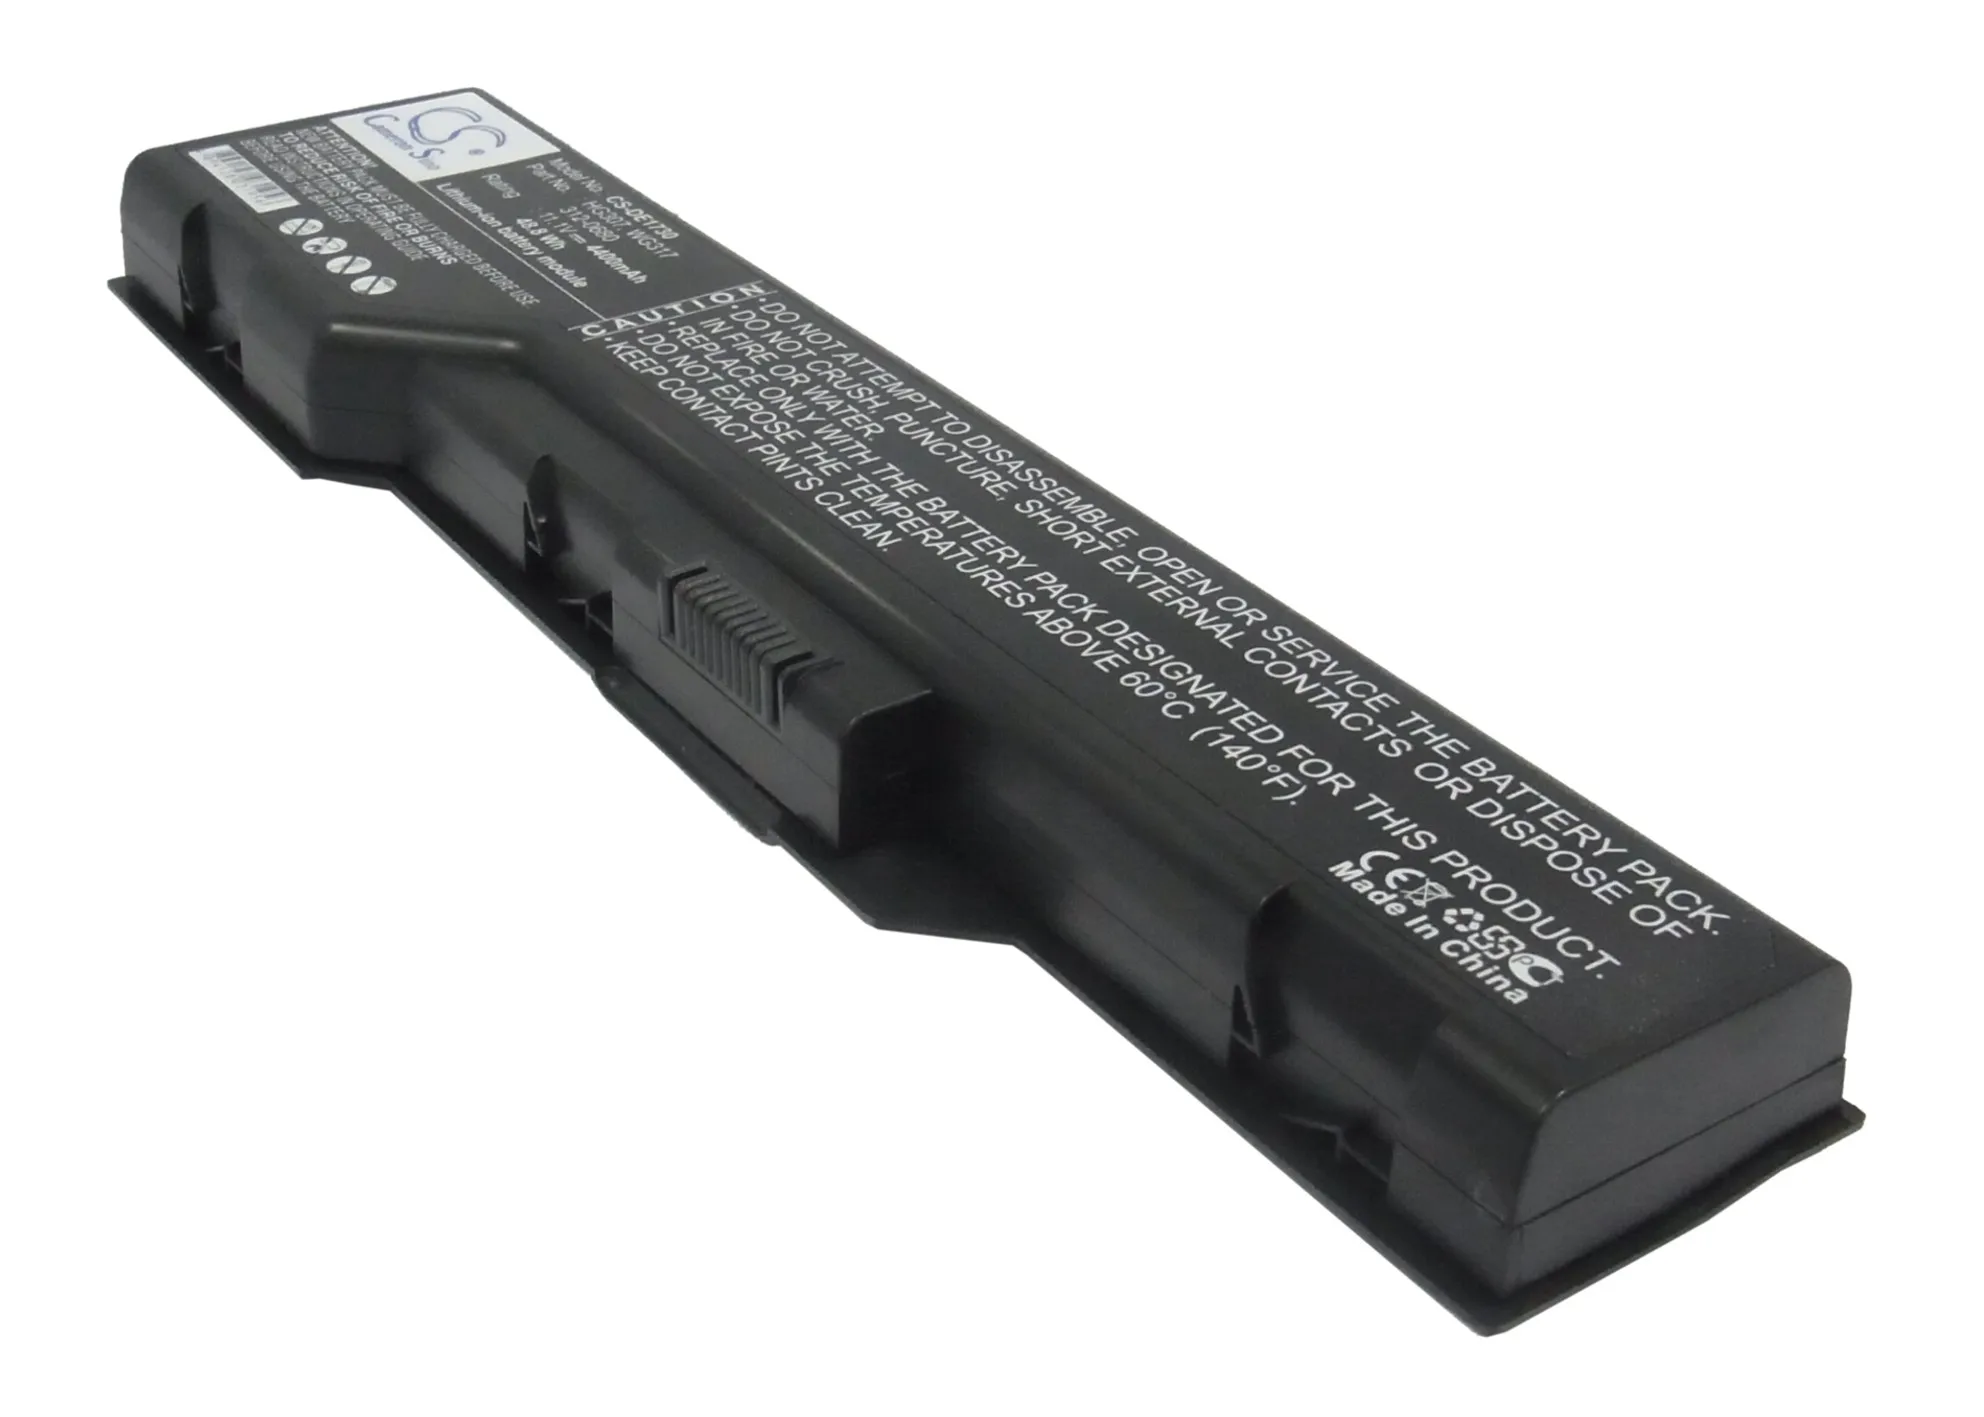 

CS 4400mAh battery for DELL XPS 1730, XPS M1730 312-0680, HG307, WG317